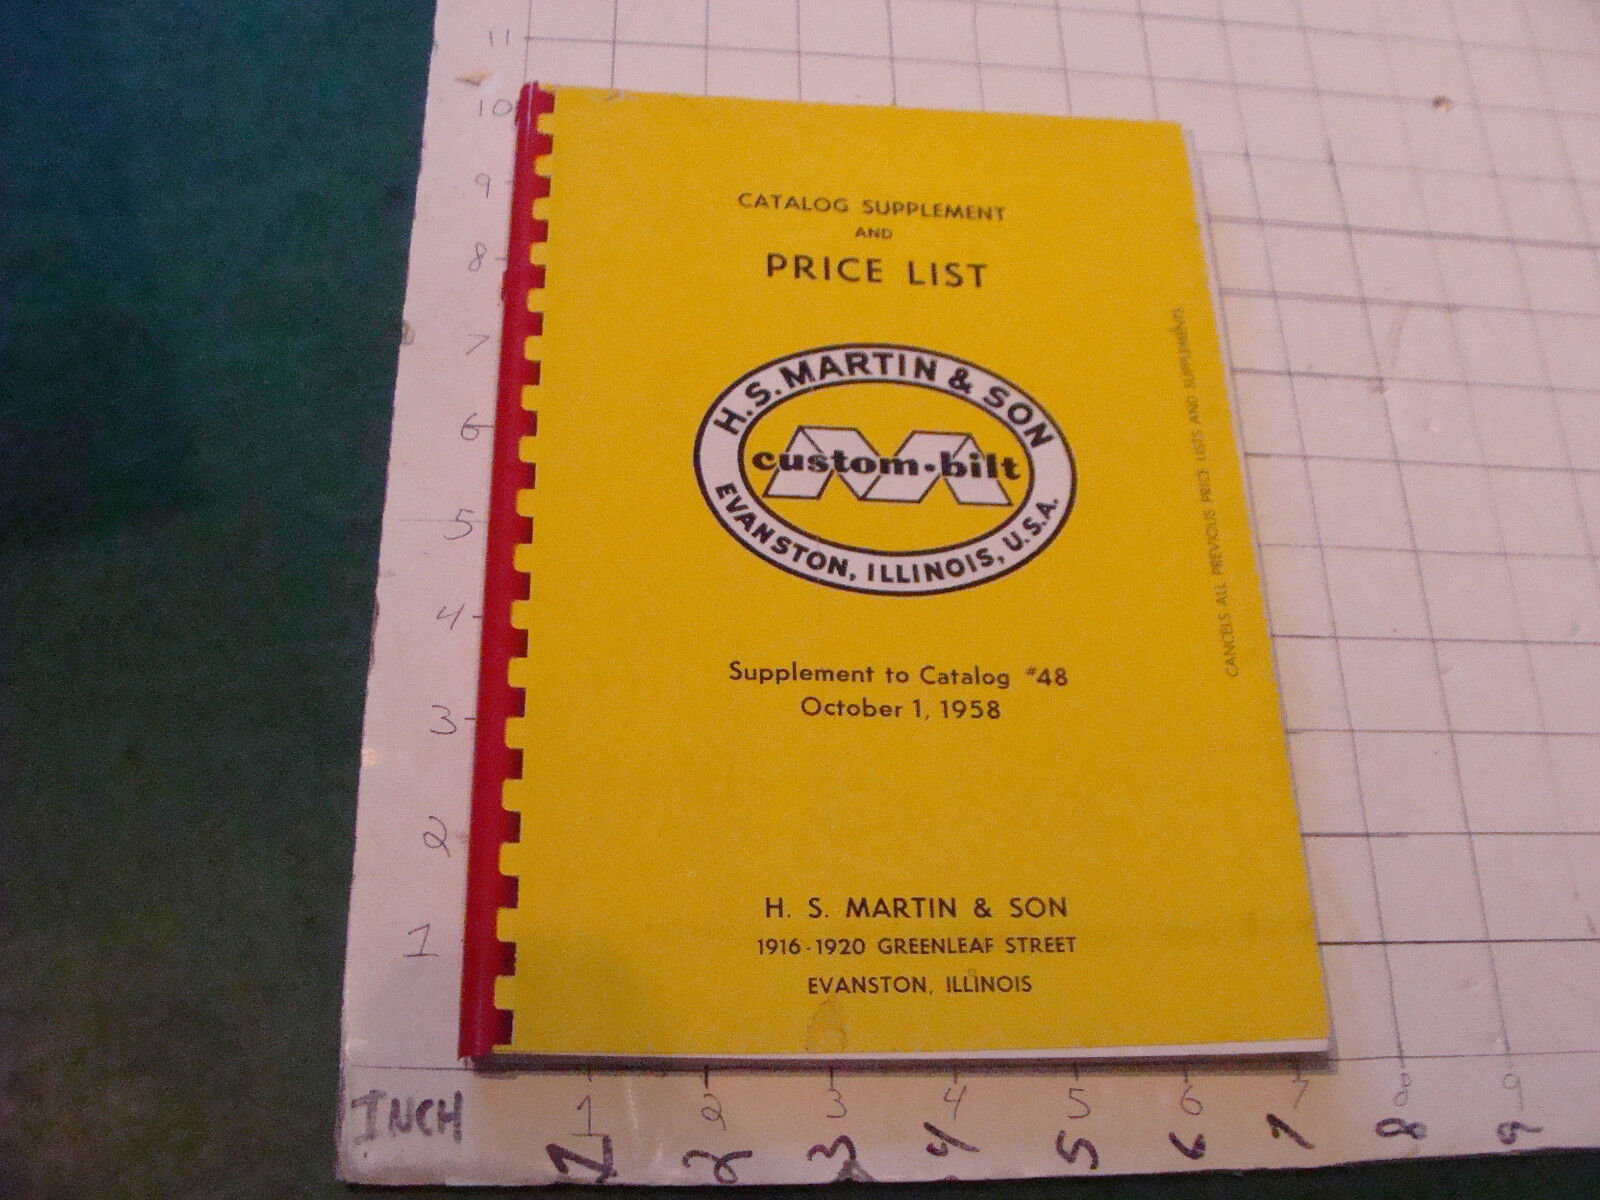 Orig Vintage CATALOG: supplement and price list H.S MARTIN & SON custom-bilt '58